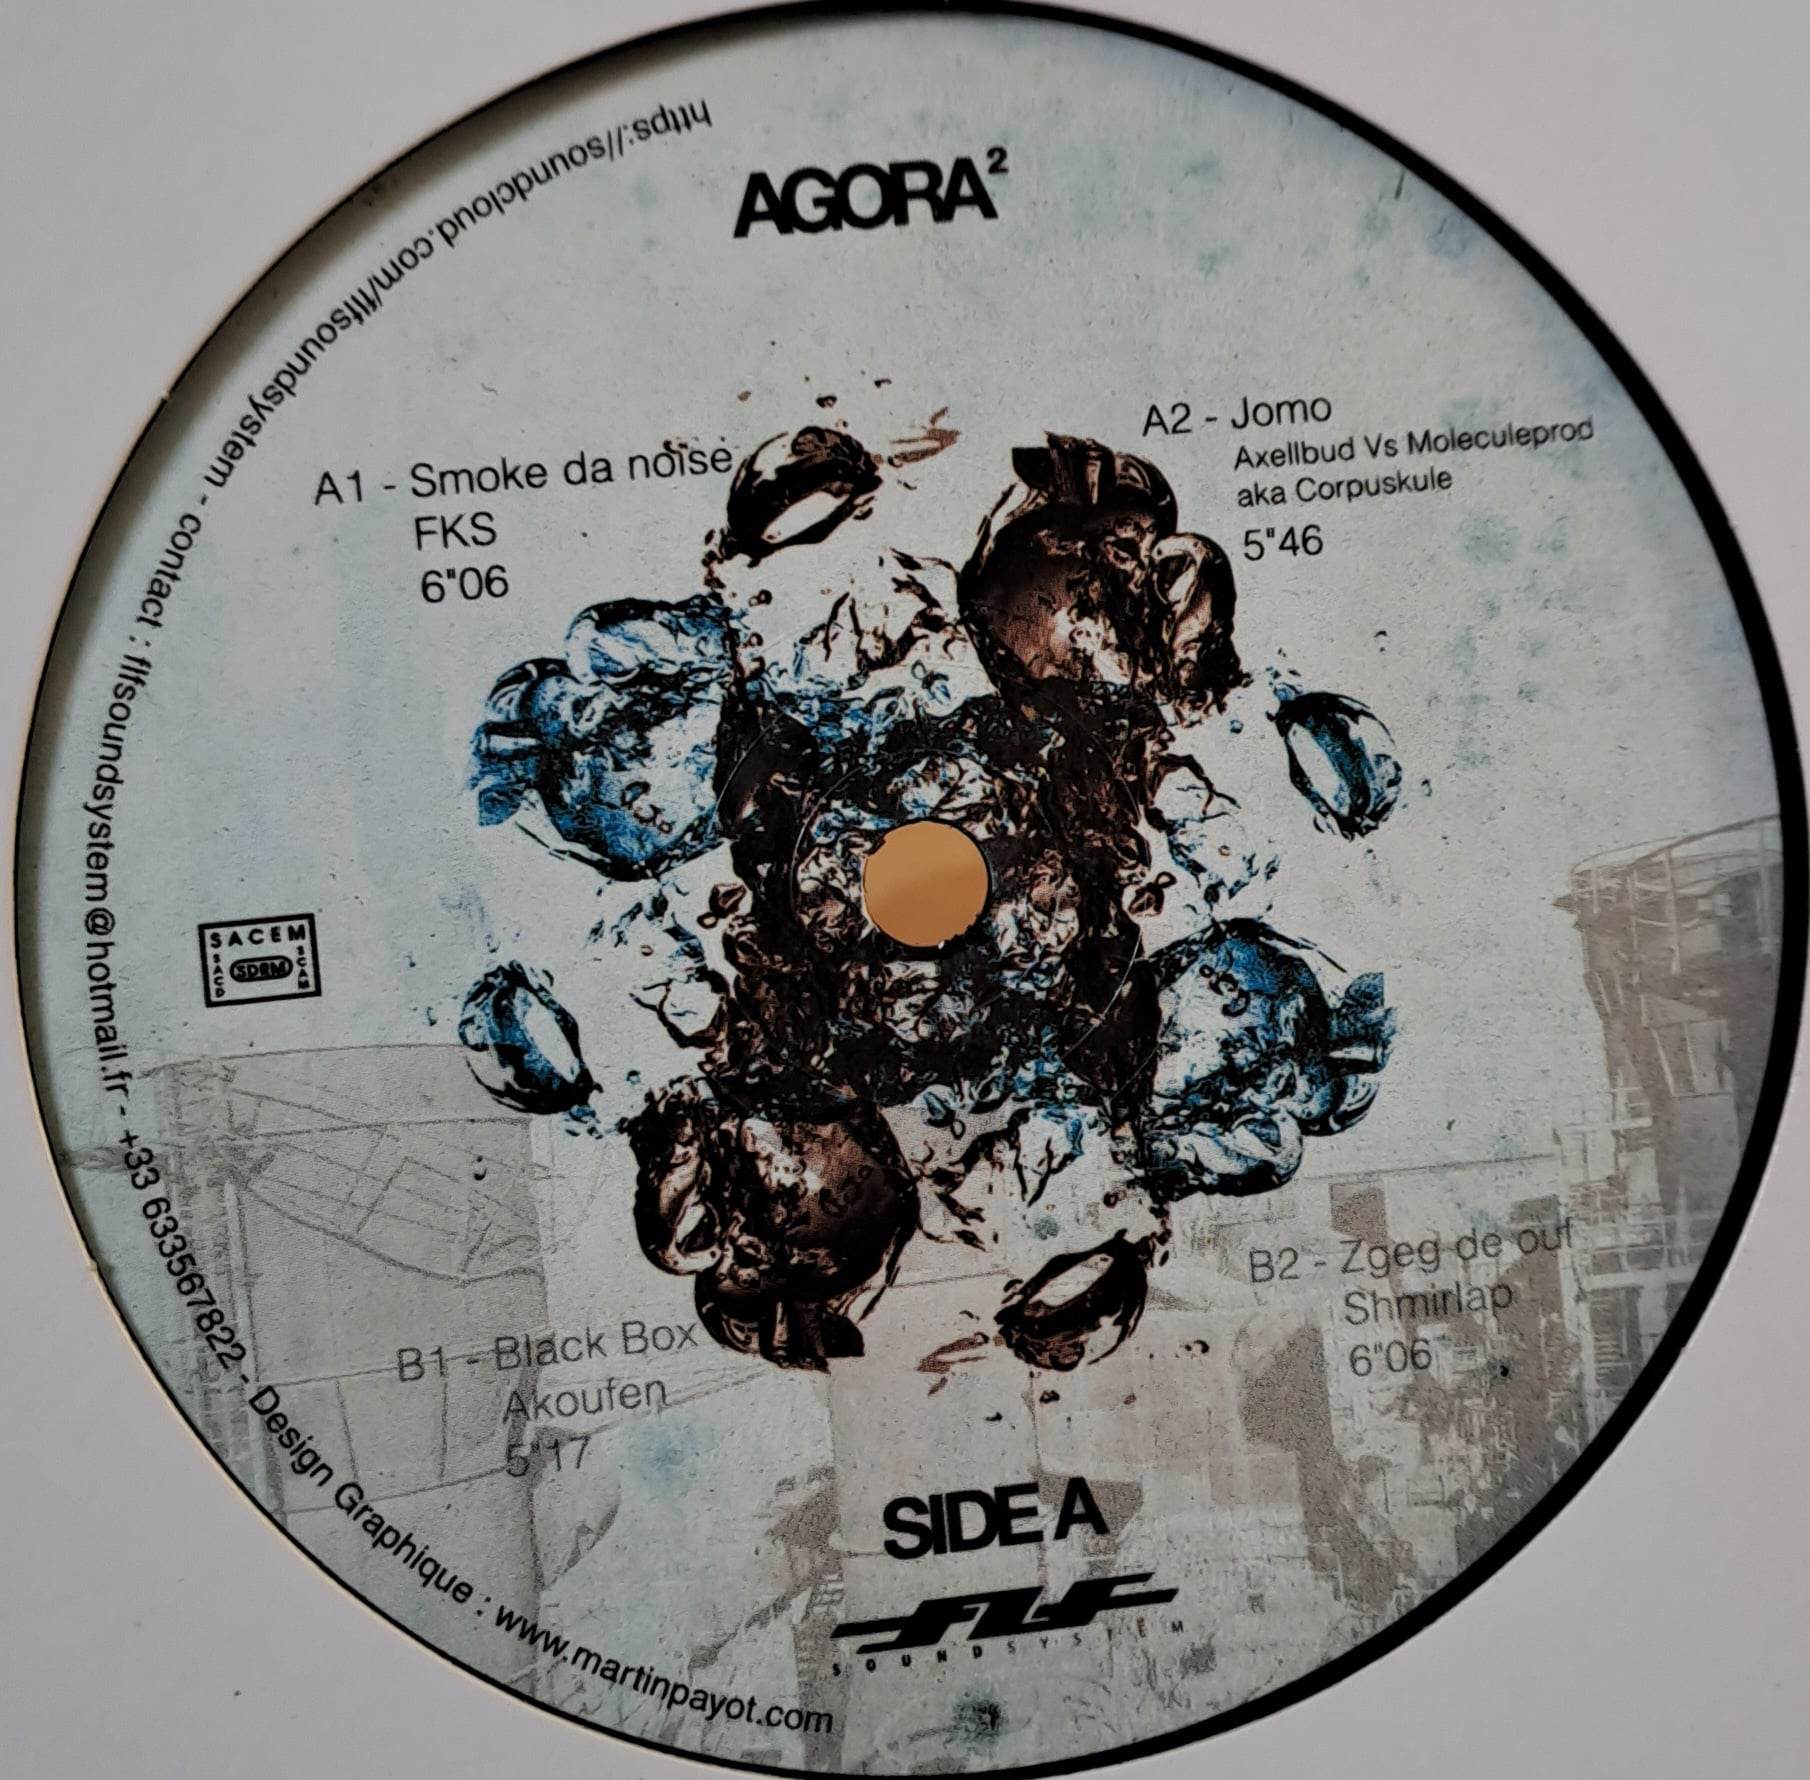 Agora 002 - vinyle acid